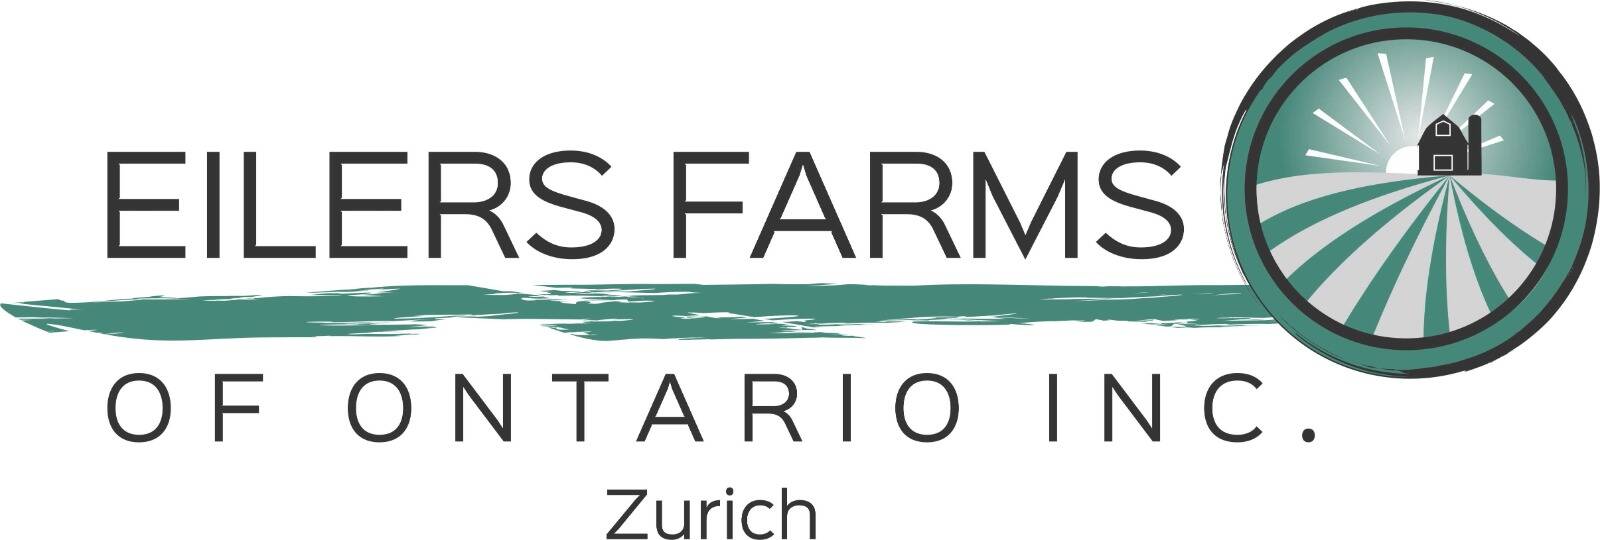 Eilers Farms of Ontario Inc. 